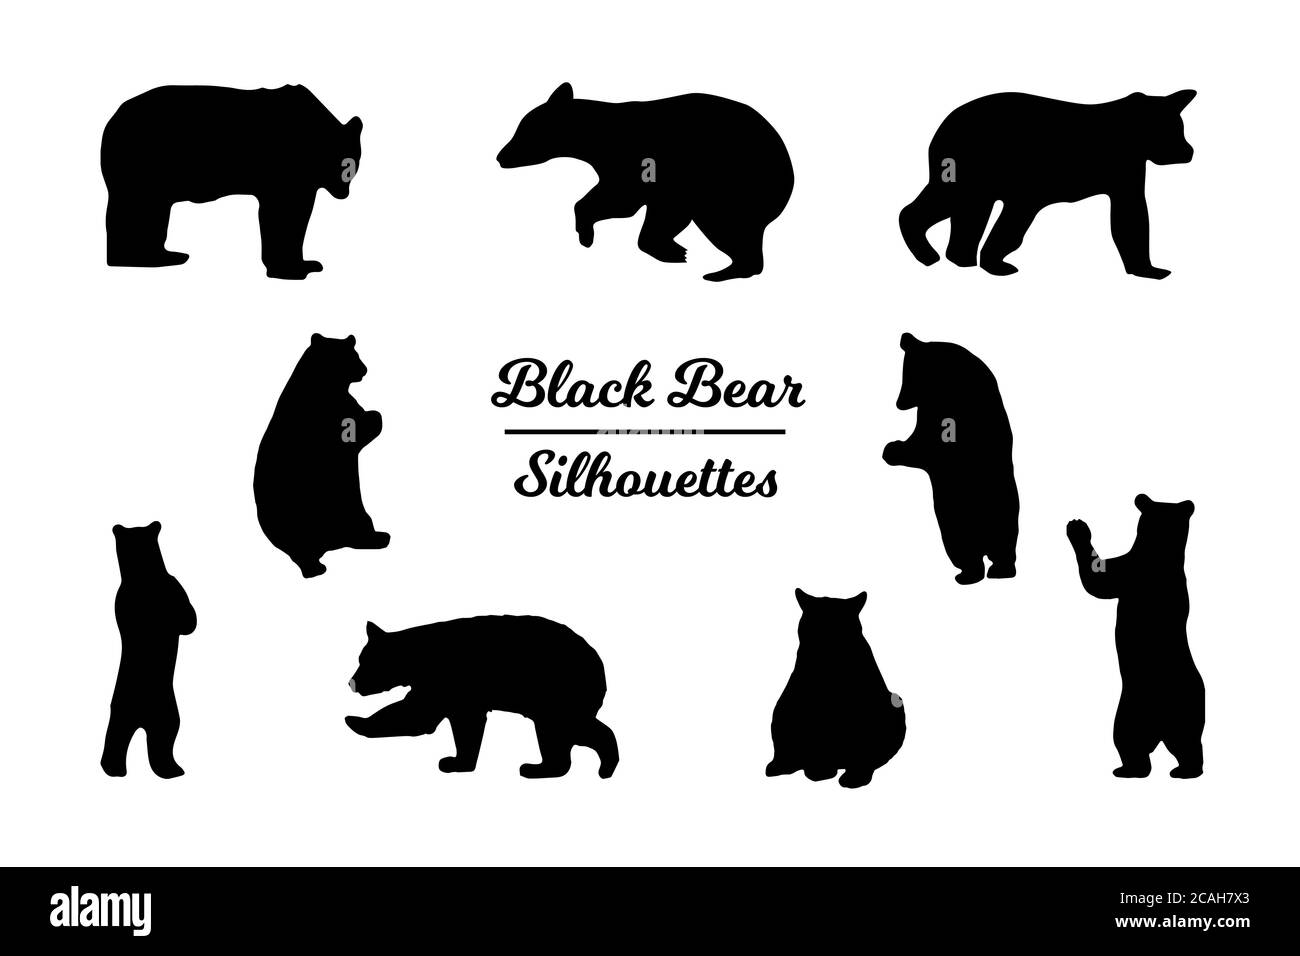 Black bear animal silhouettes. Black and white outline. Stock Photo